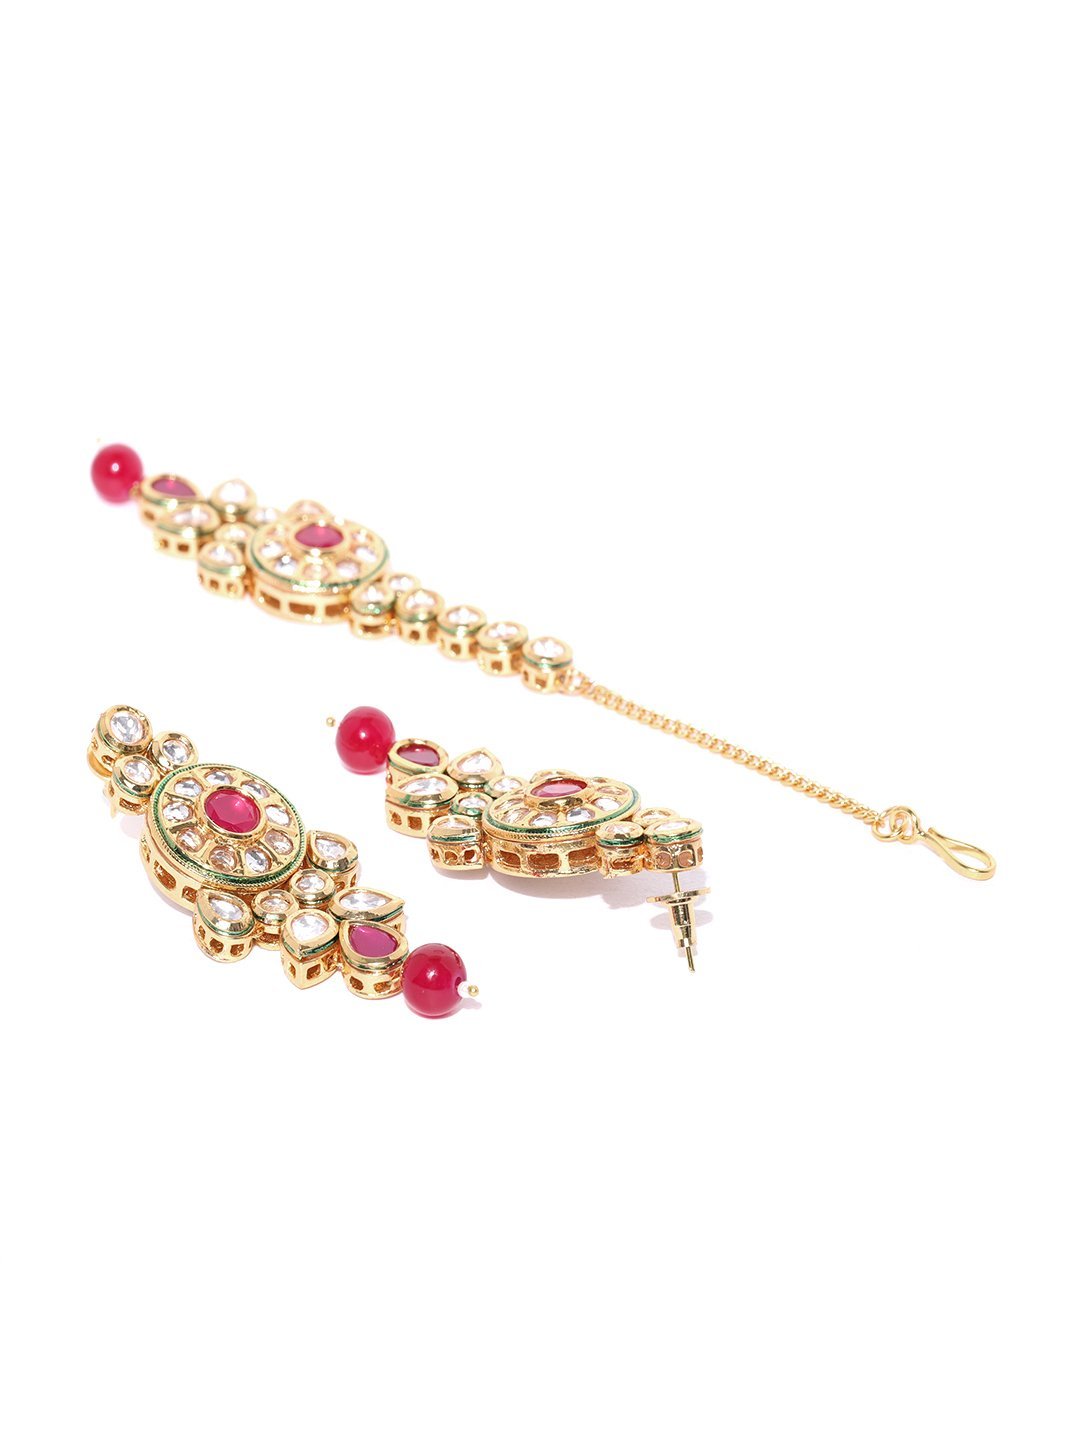 Women's Ruby Kundan Gold Plated MaangTika Jewellery Set - Priyaasi